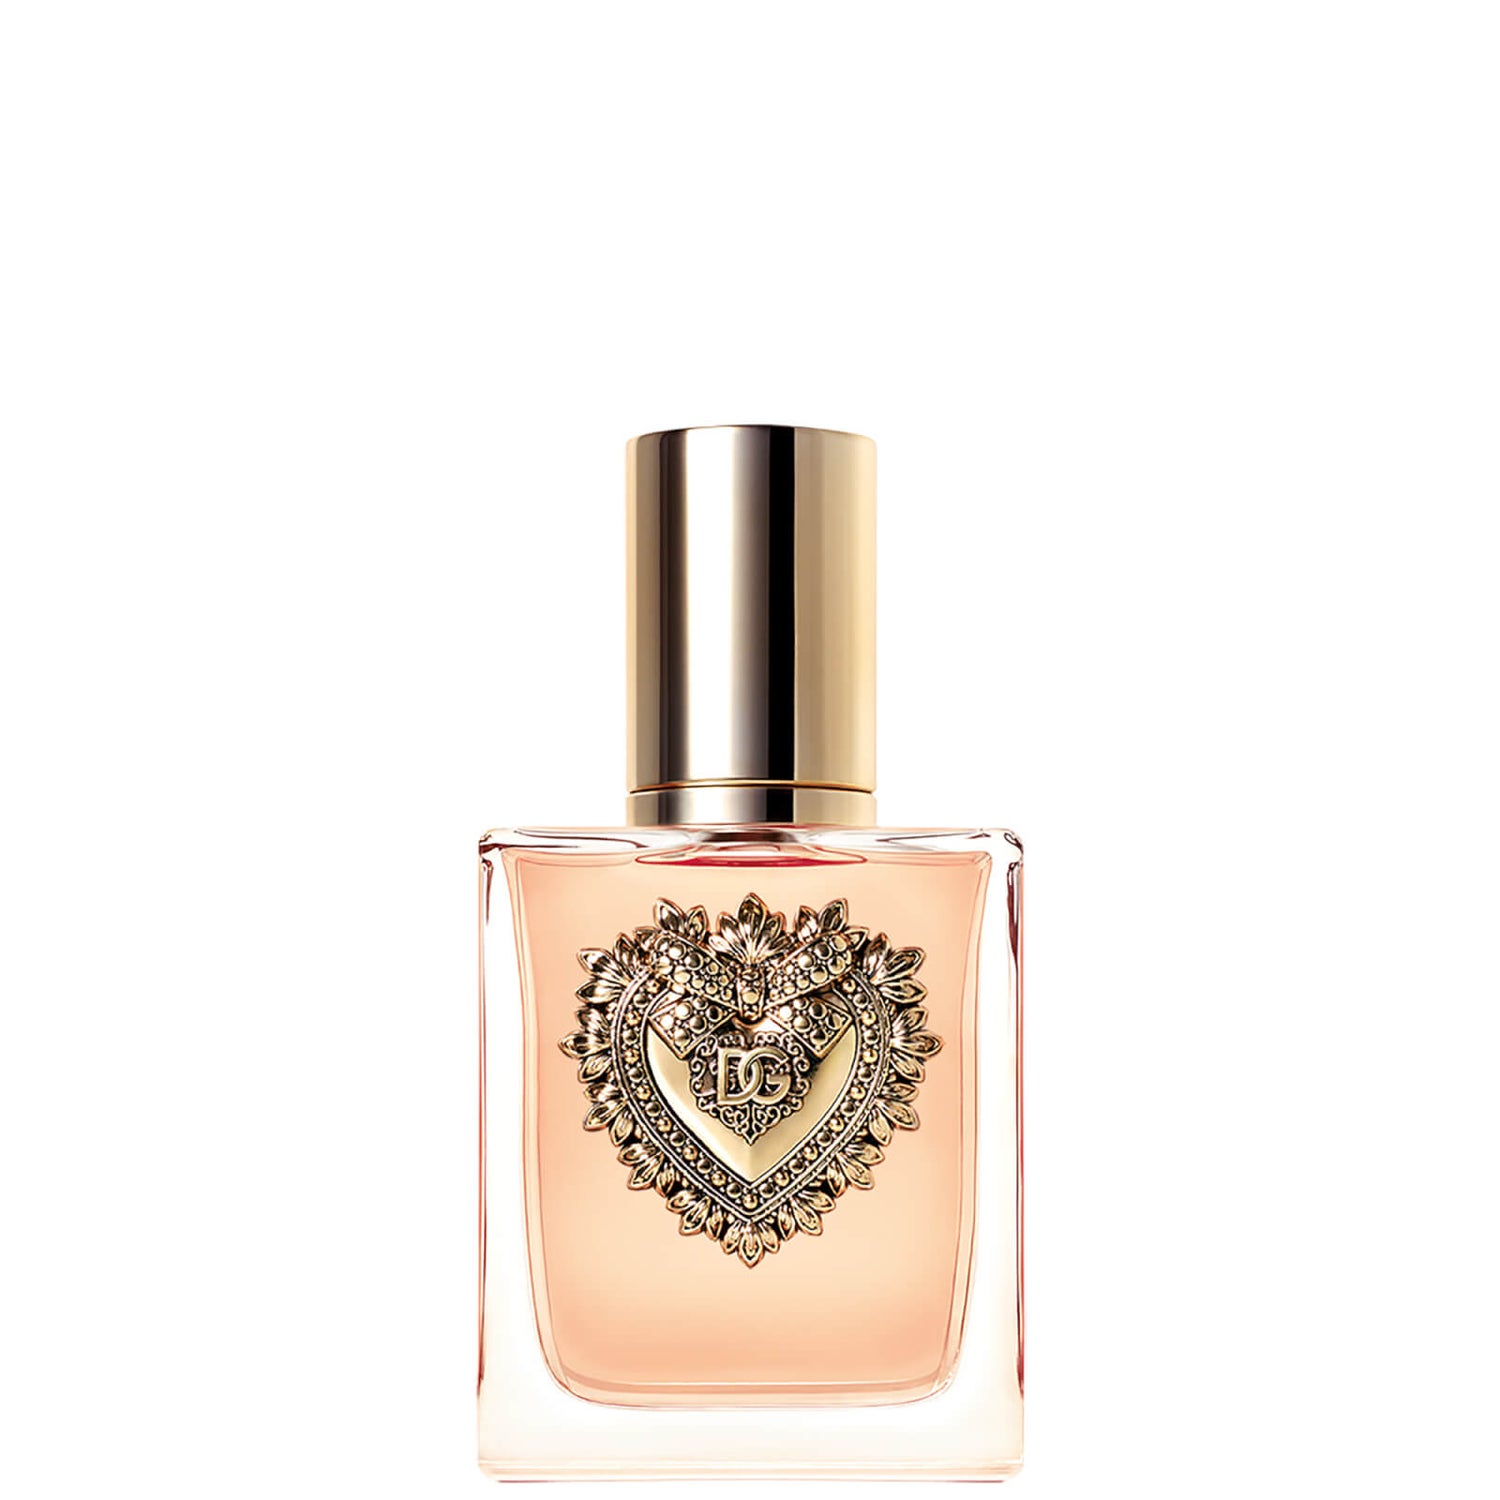 Dolce&Gabbana Devotion Eau de Parfum Spray 50ml - LOOKFANTASTIC